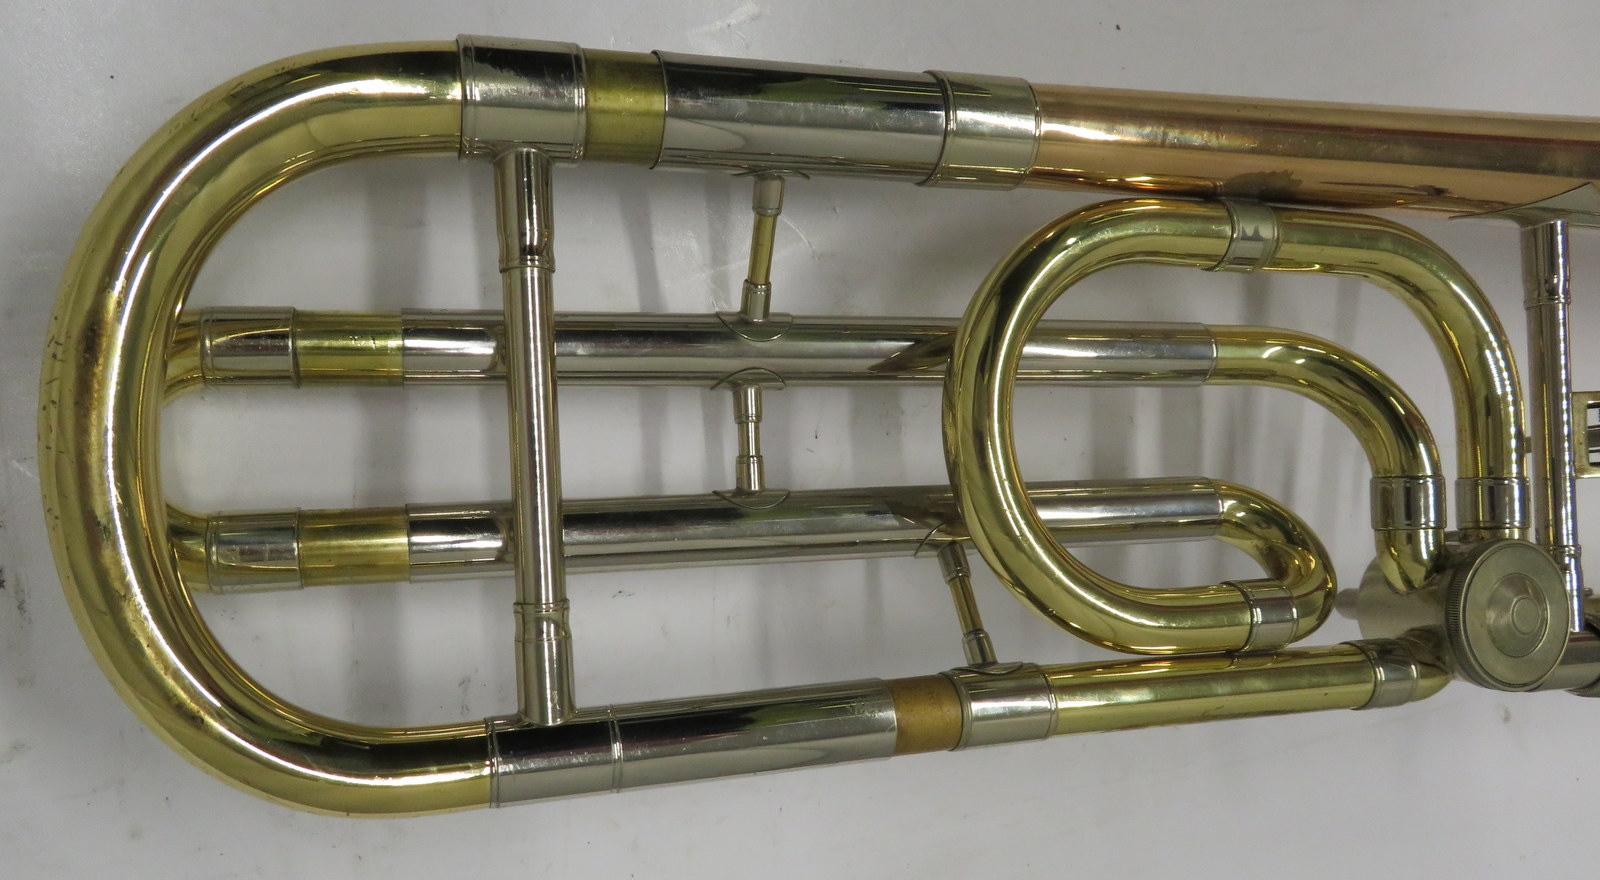 conn trombone serial numbers